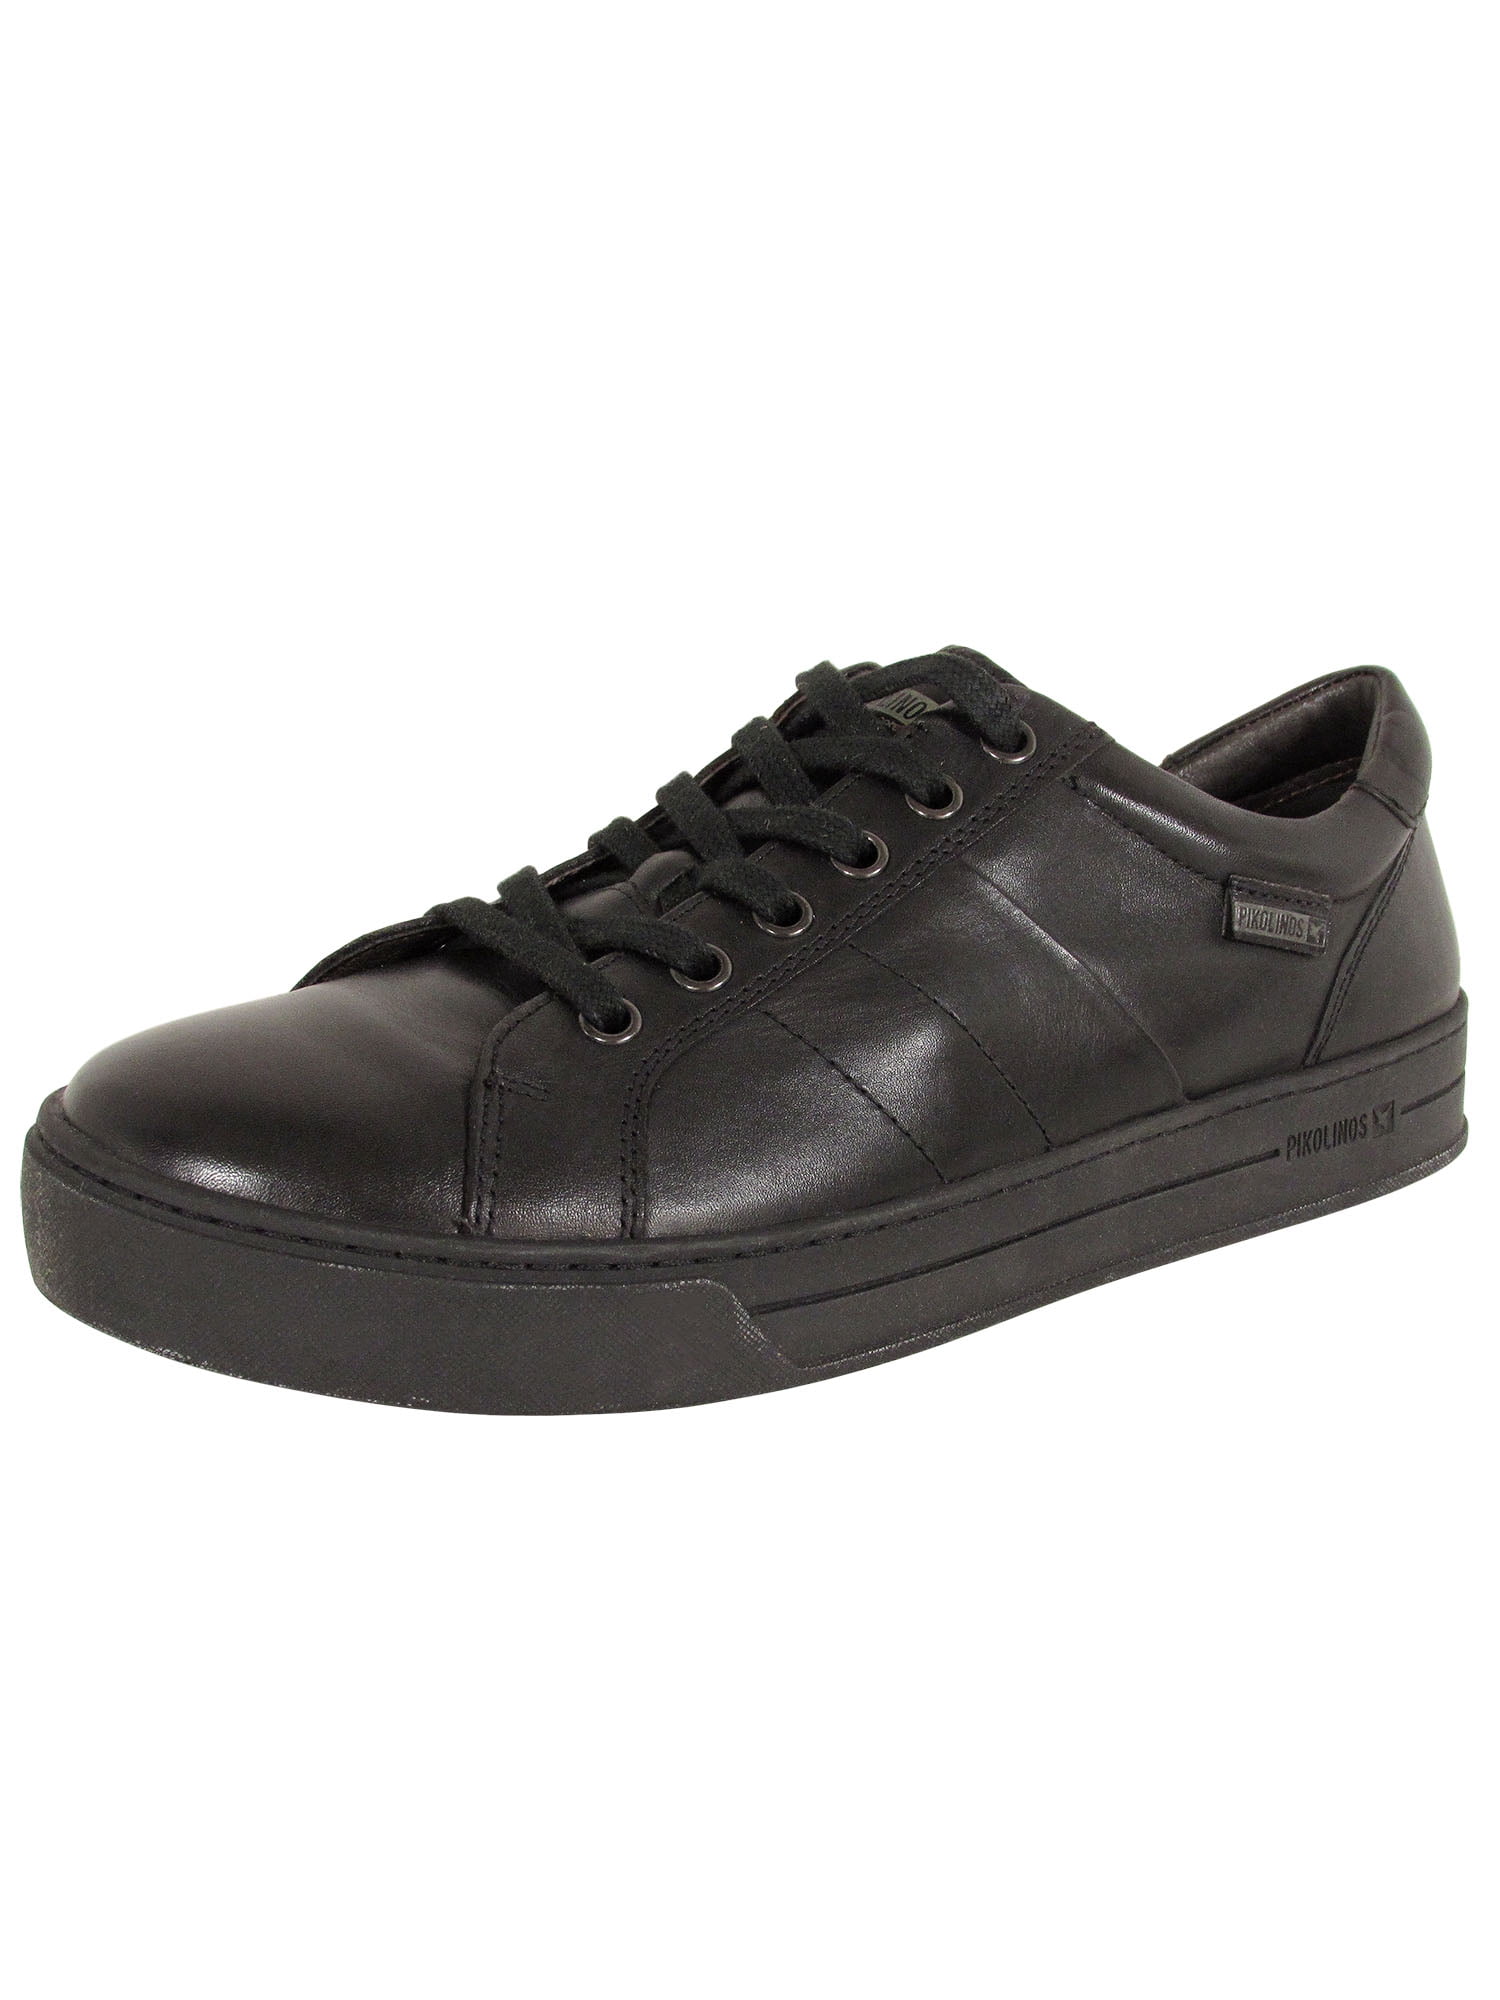 Pikolinos - Pikolinos Mens Mackenzie M0C-6008 Sneaker Shoes, Black, 40 ...